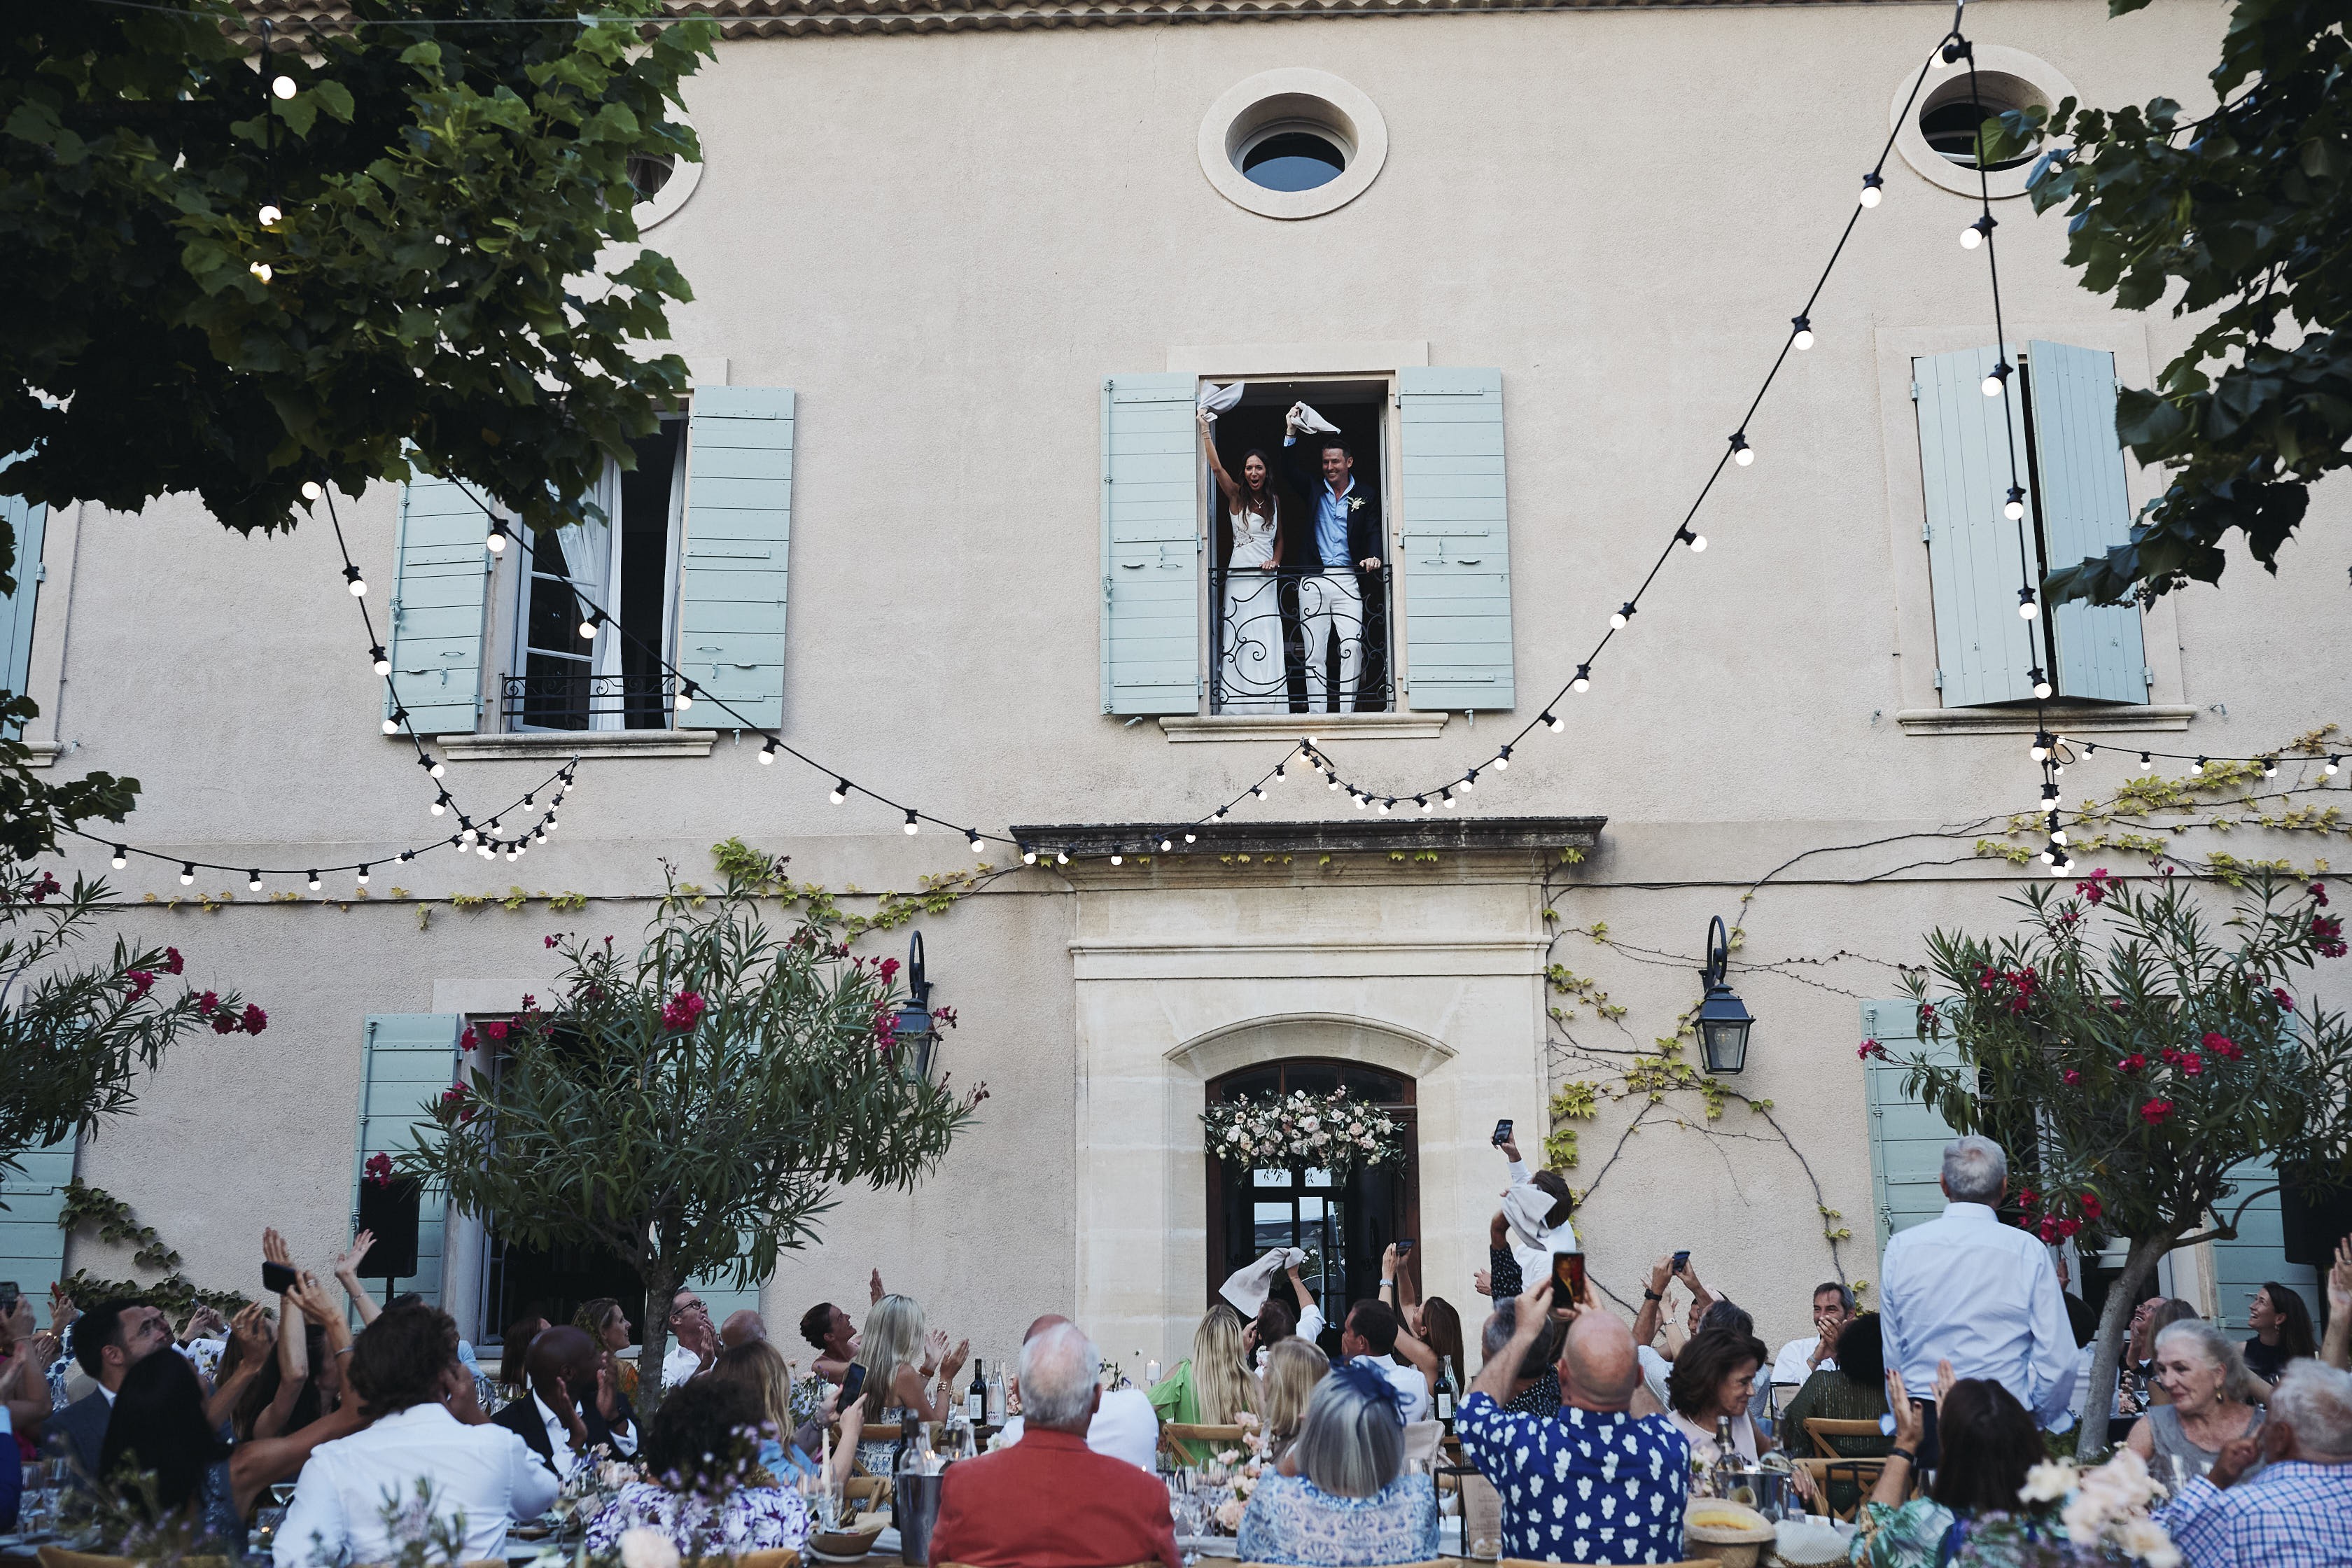 Provence Wedding - Chateau de Grimaldi